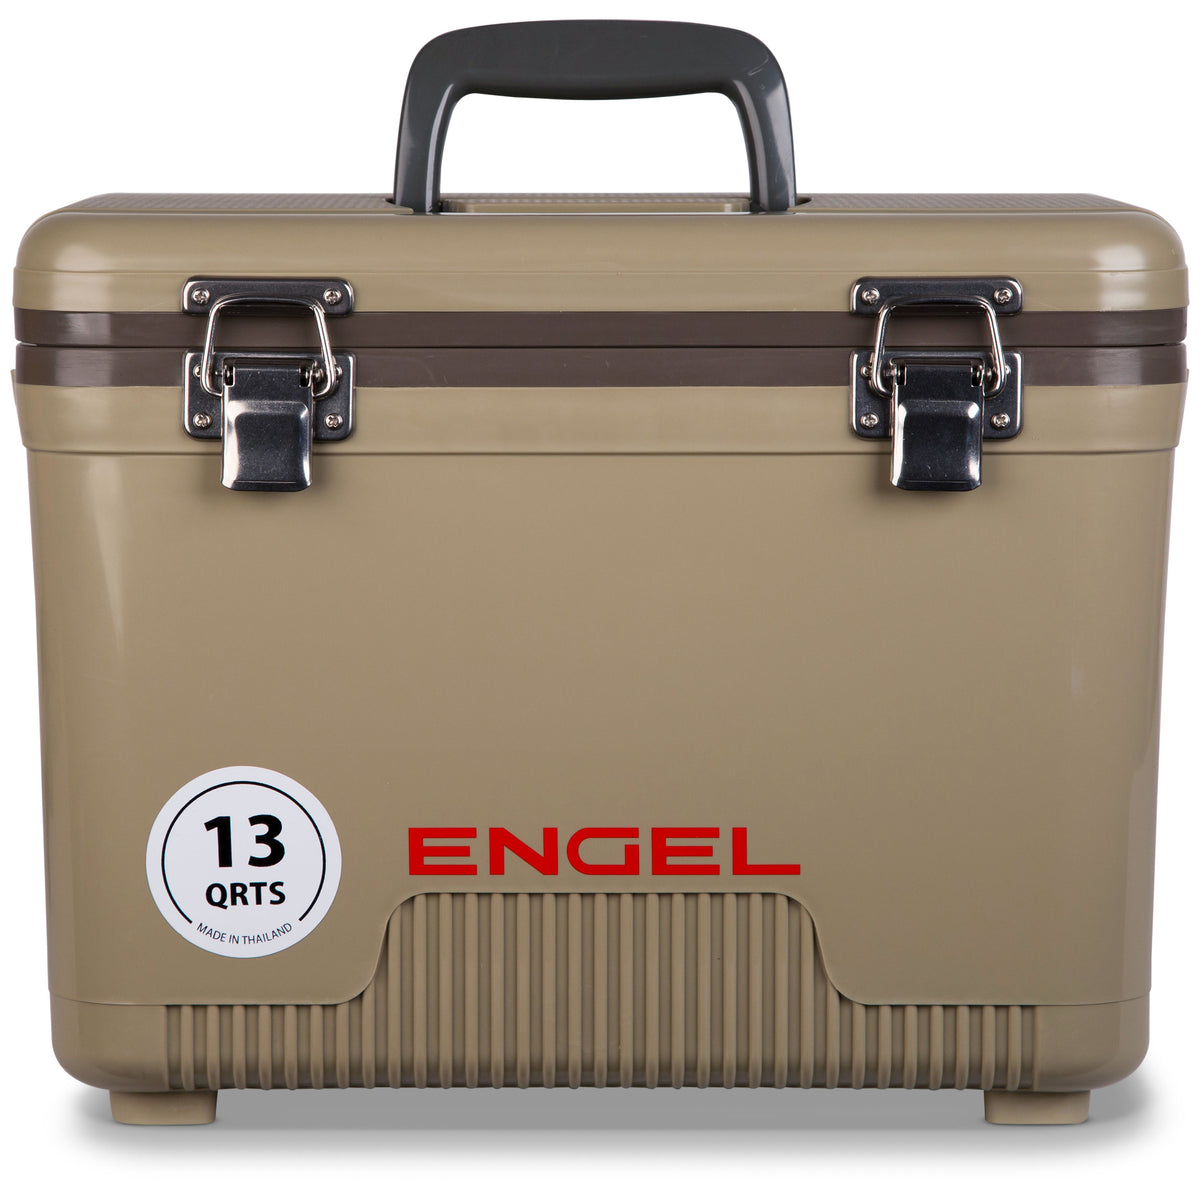 Engel 13 Quart Drybox/Cooler - Tan